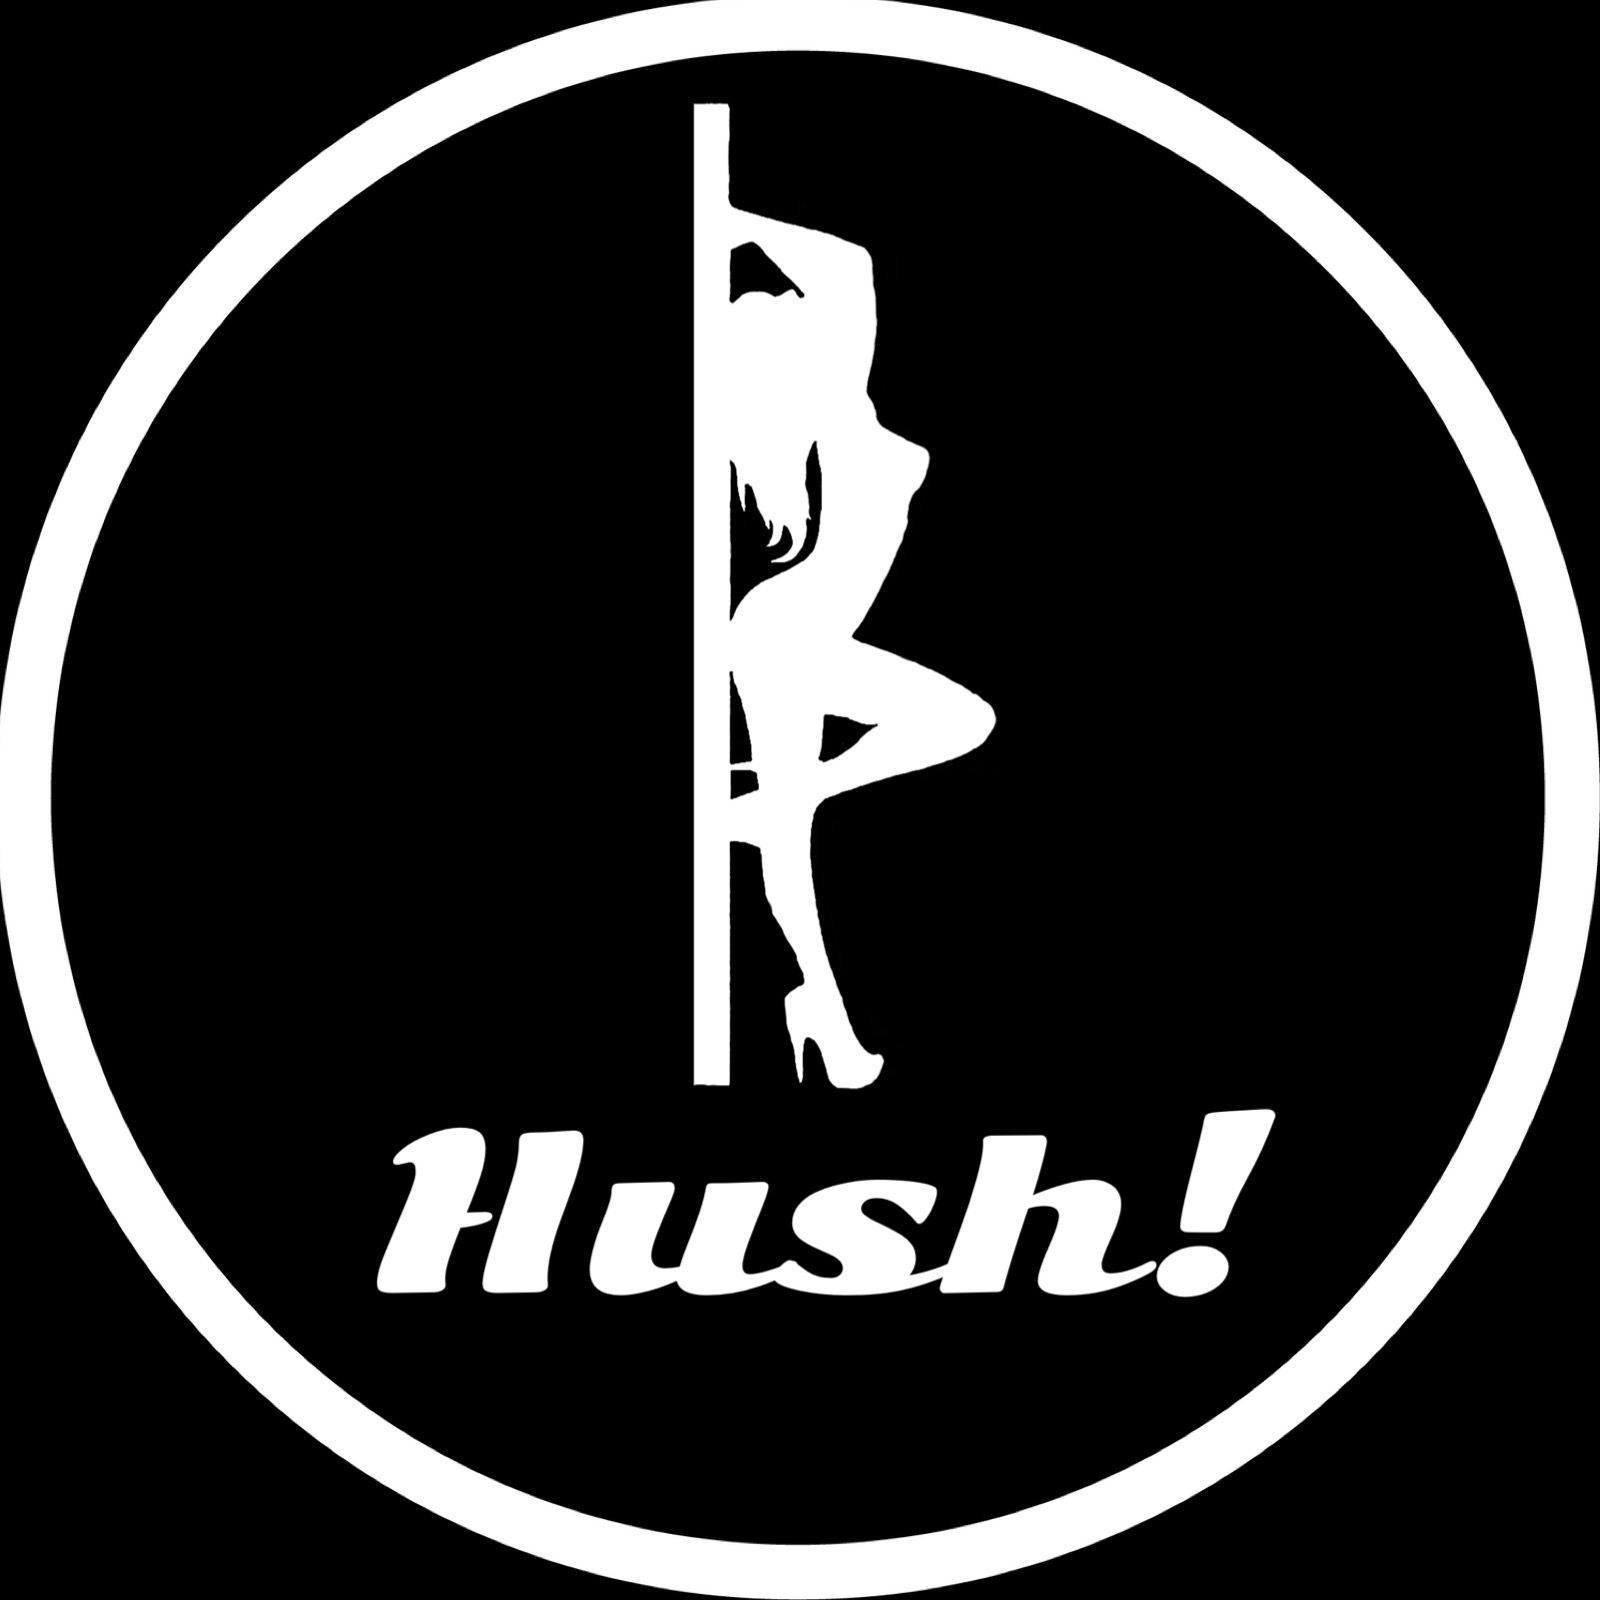 Hush! - Hush! Vol. 71- Focus on Fuckcation